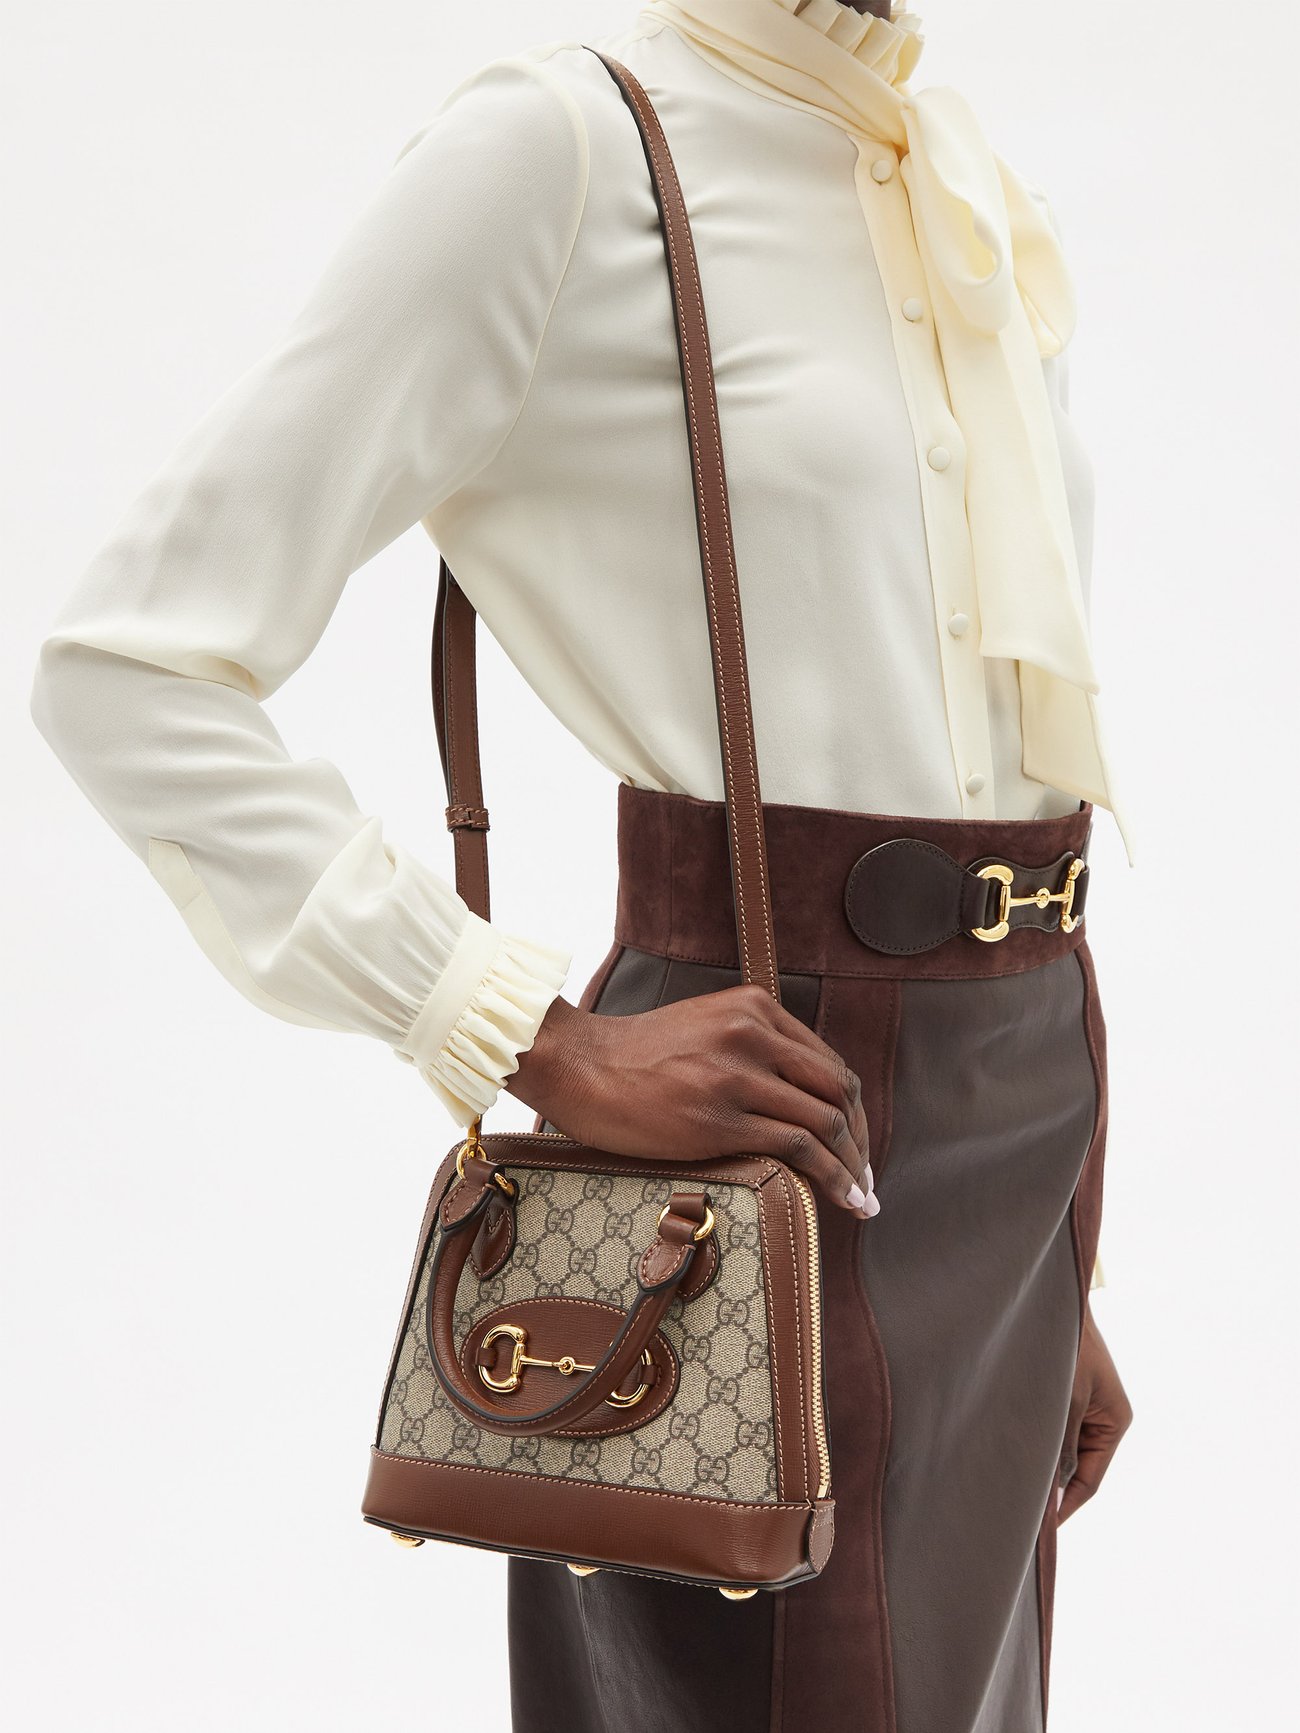 Brown 1955 Horsebit GG Supreme mini leather bag, Gucci